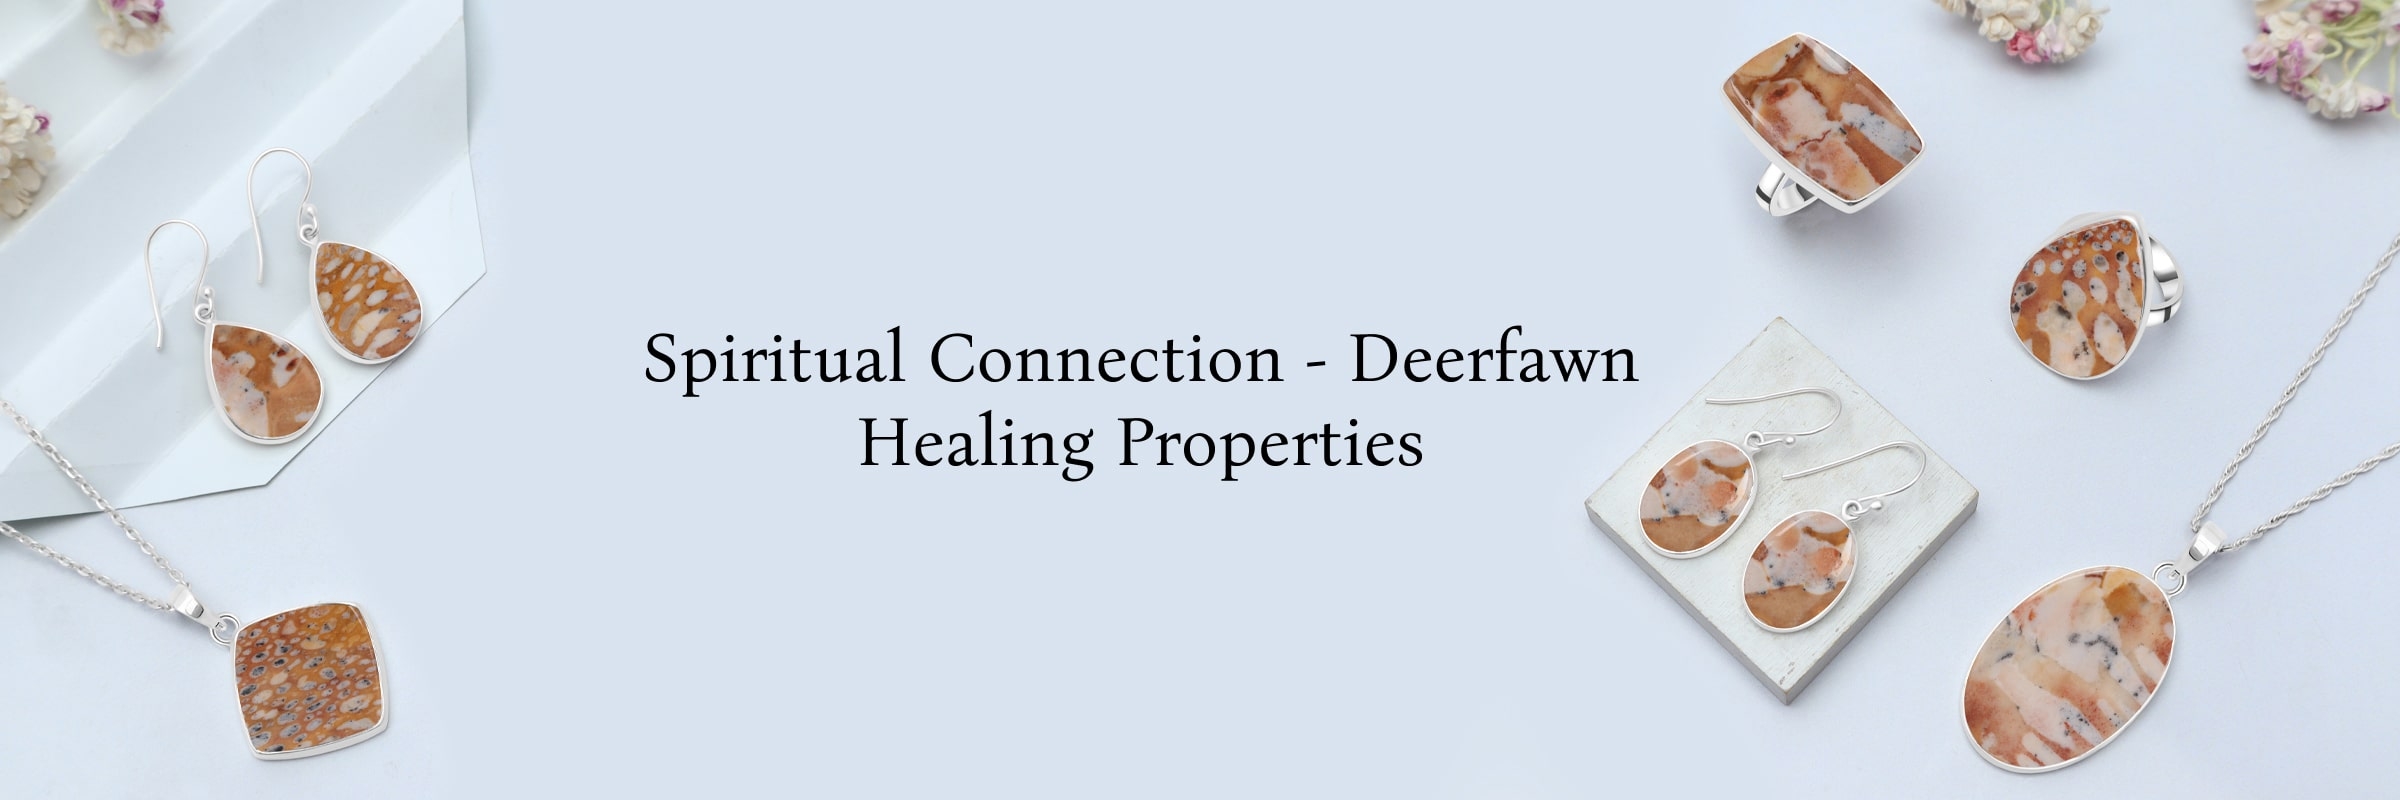 Deerfawn Healing and Metaphysical Properties